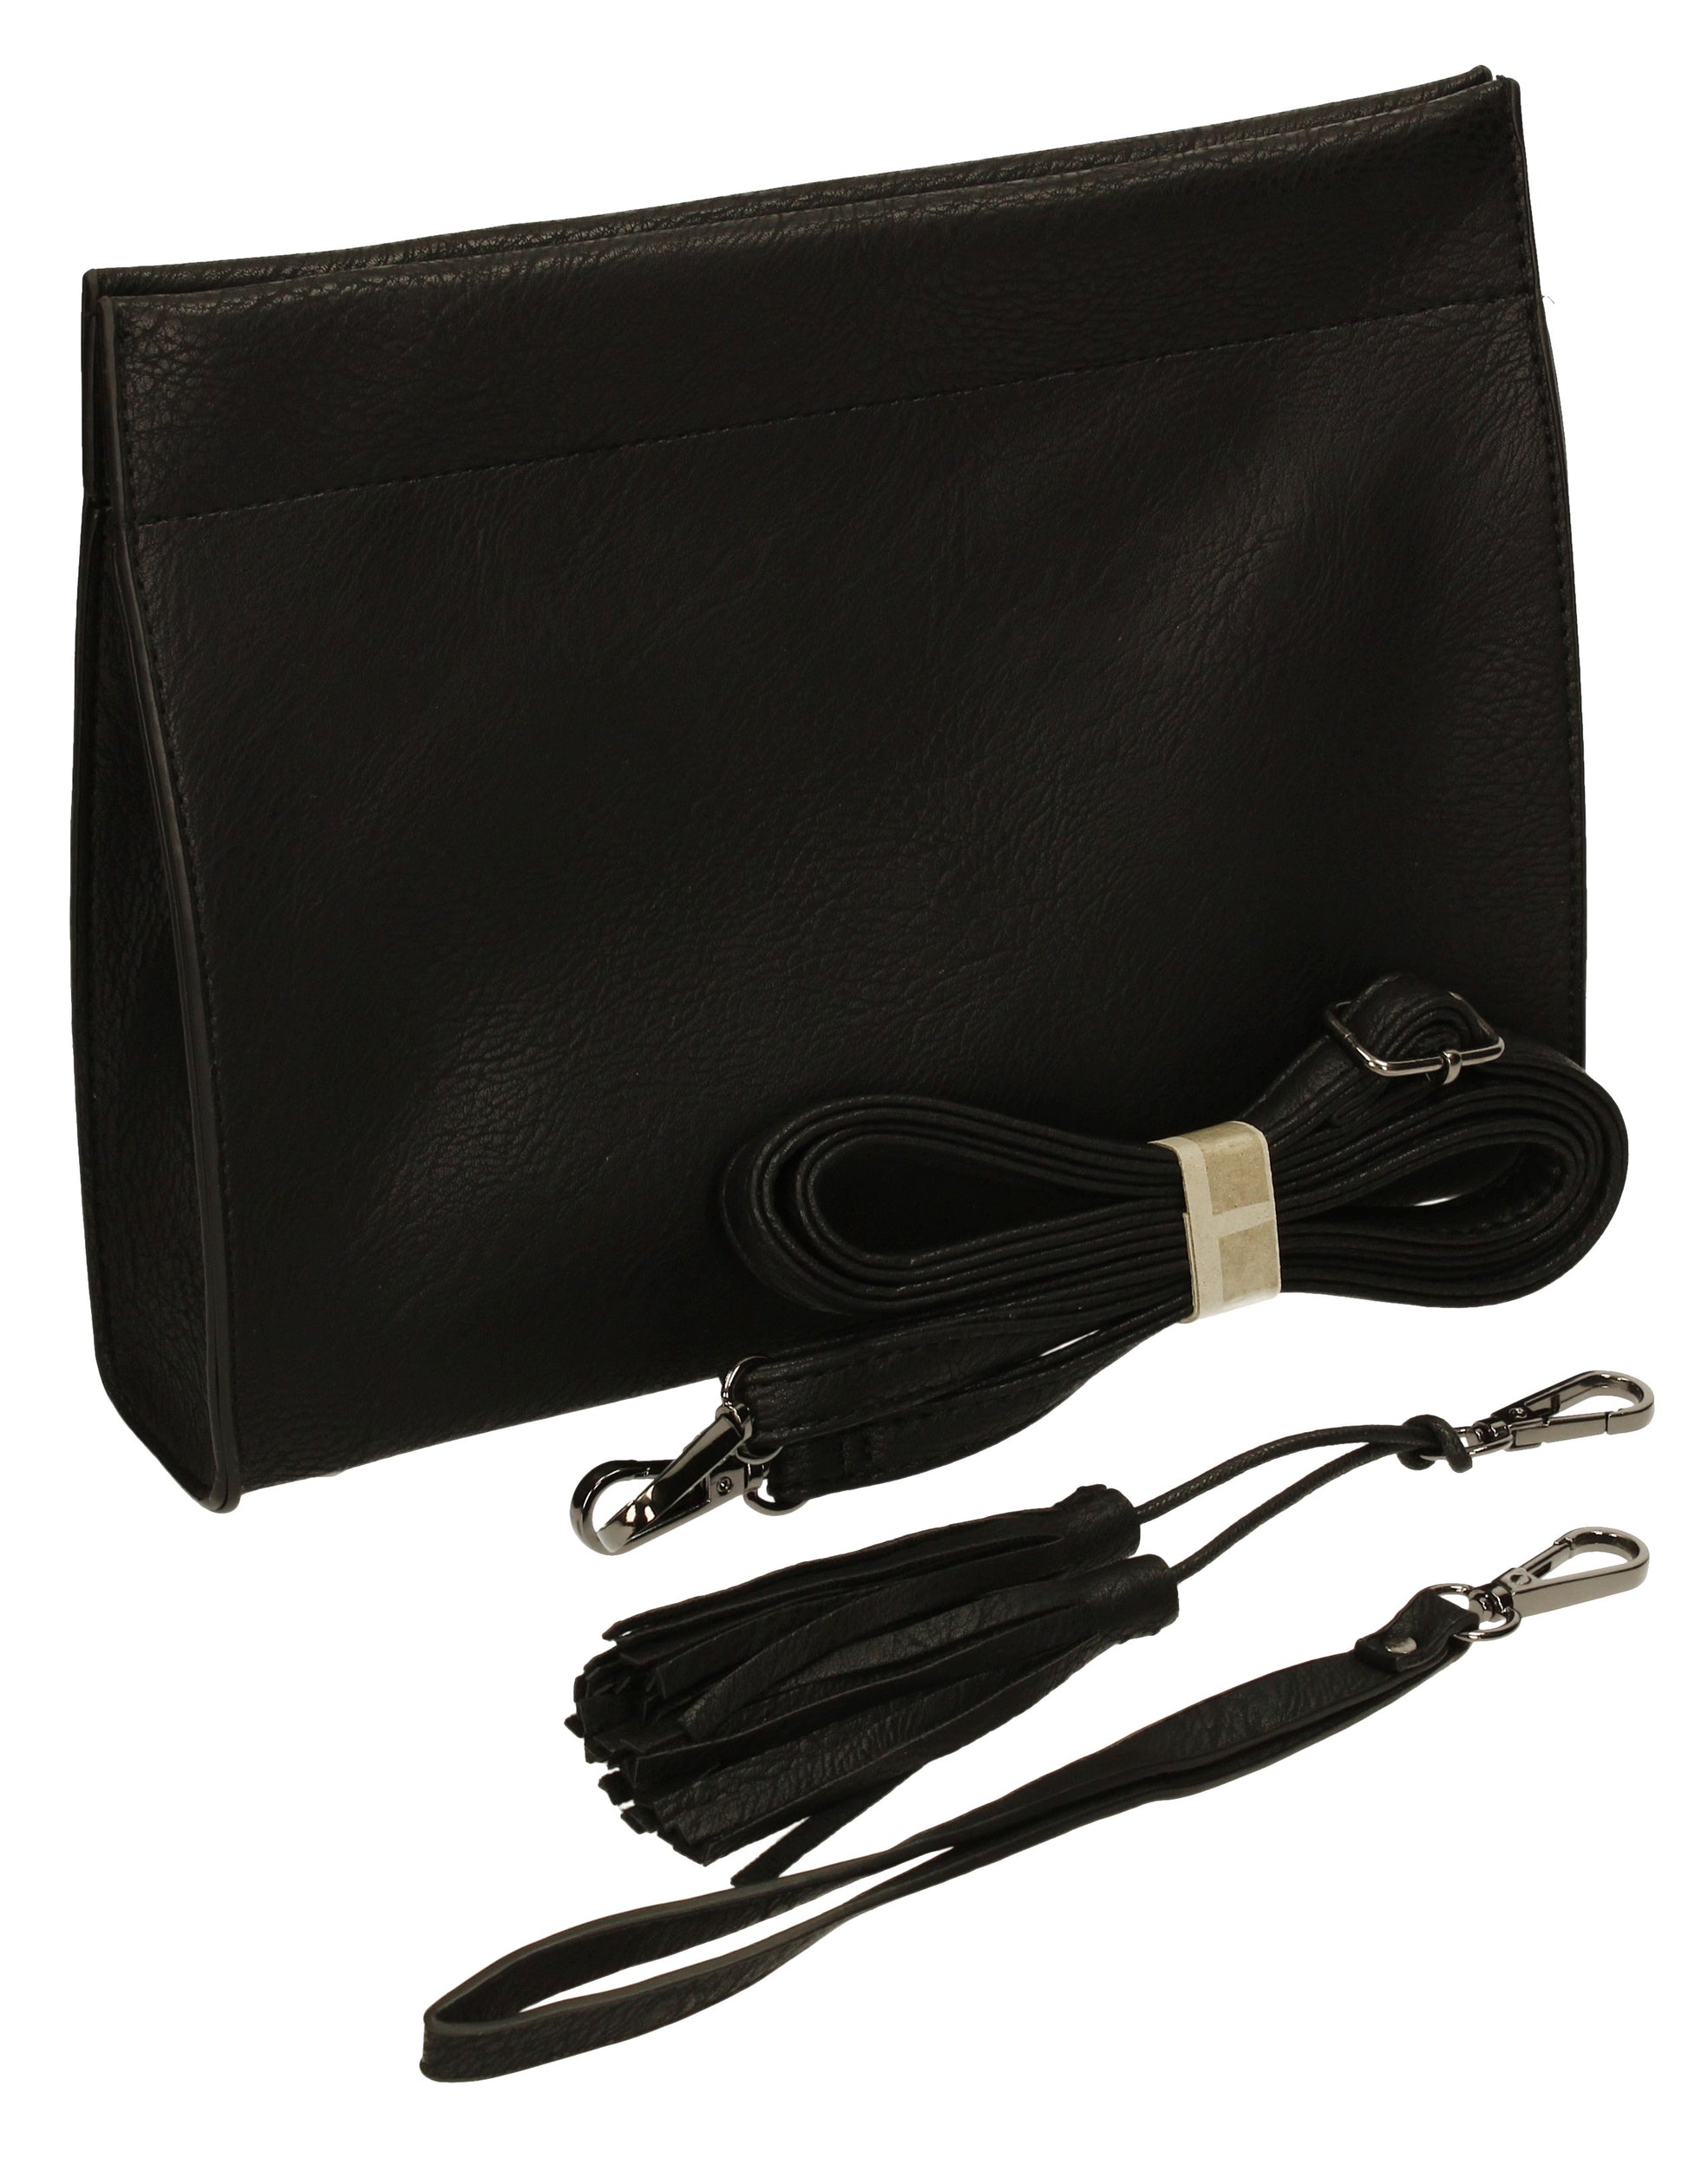 SWANKYSWANS Dina Tassel Clutch Bag Black Cute Cheap Clutch Bag For Weddings School and Work